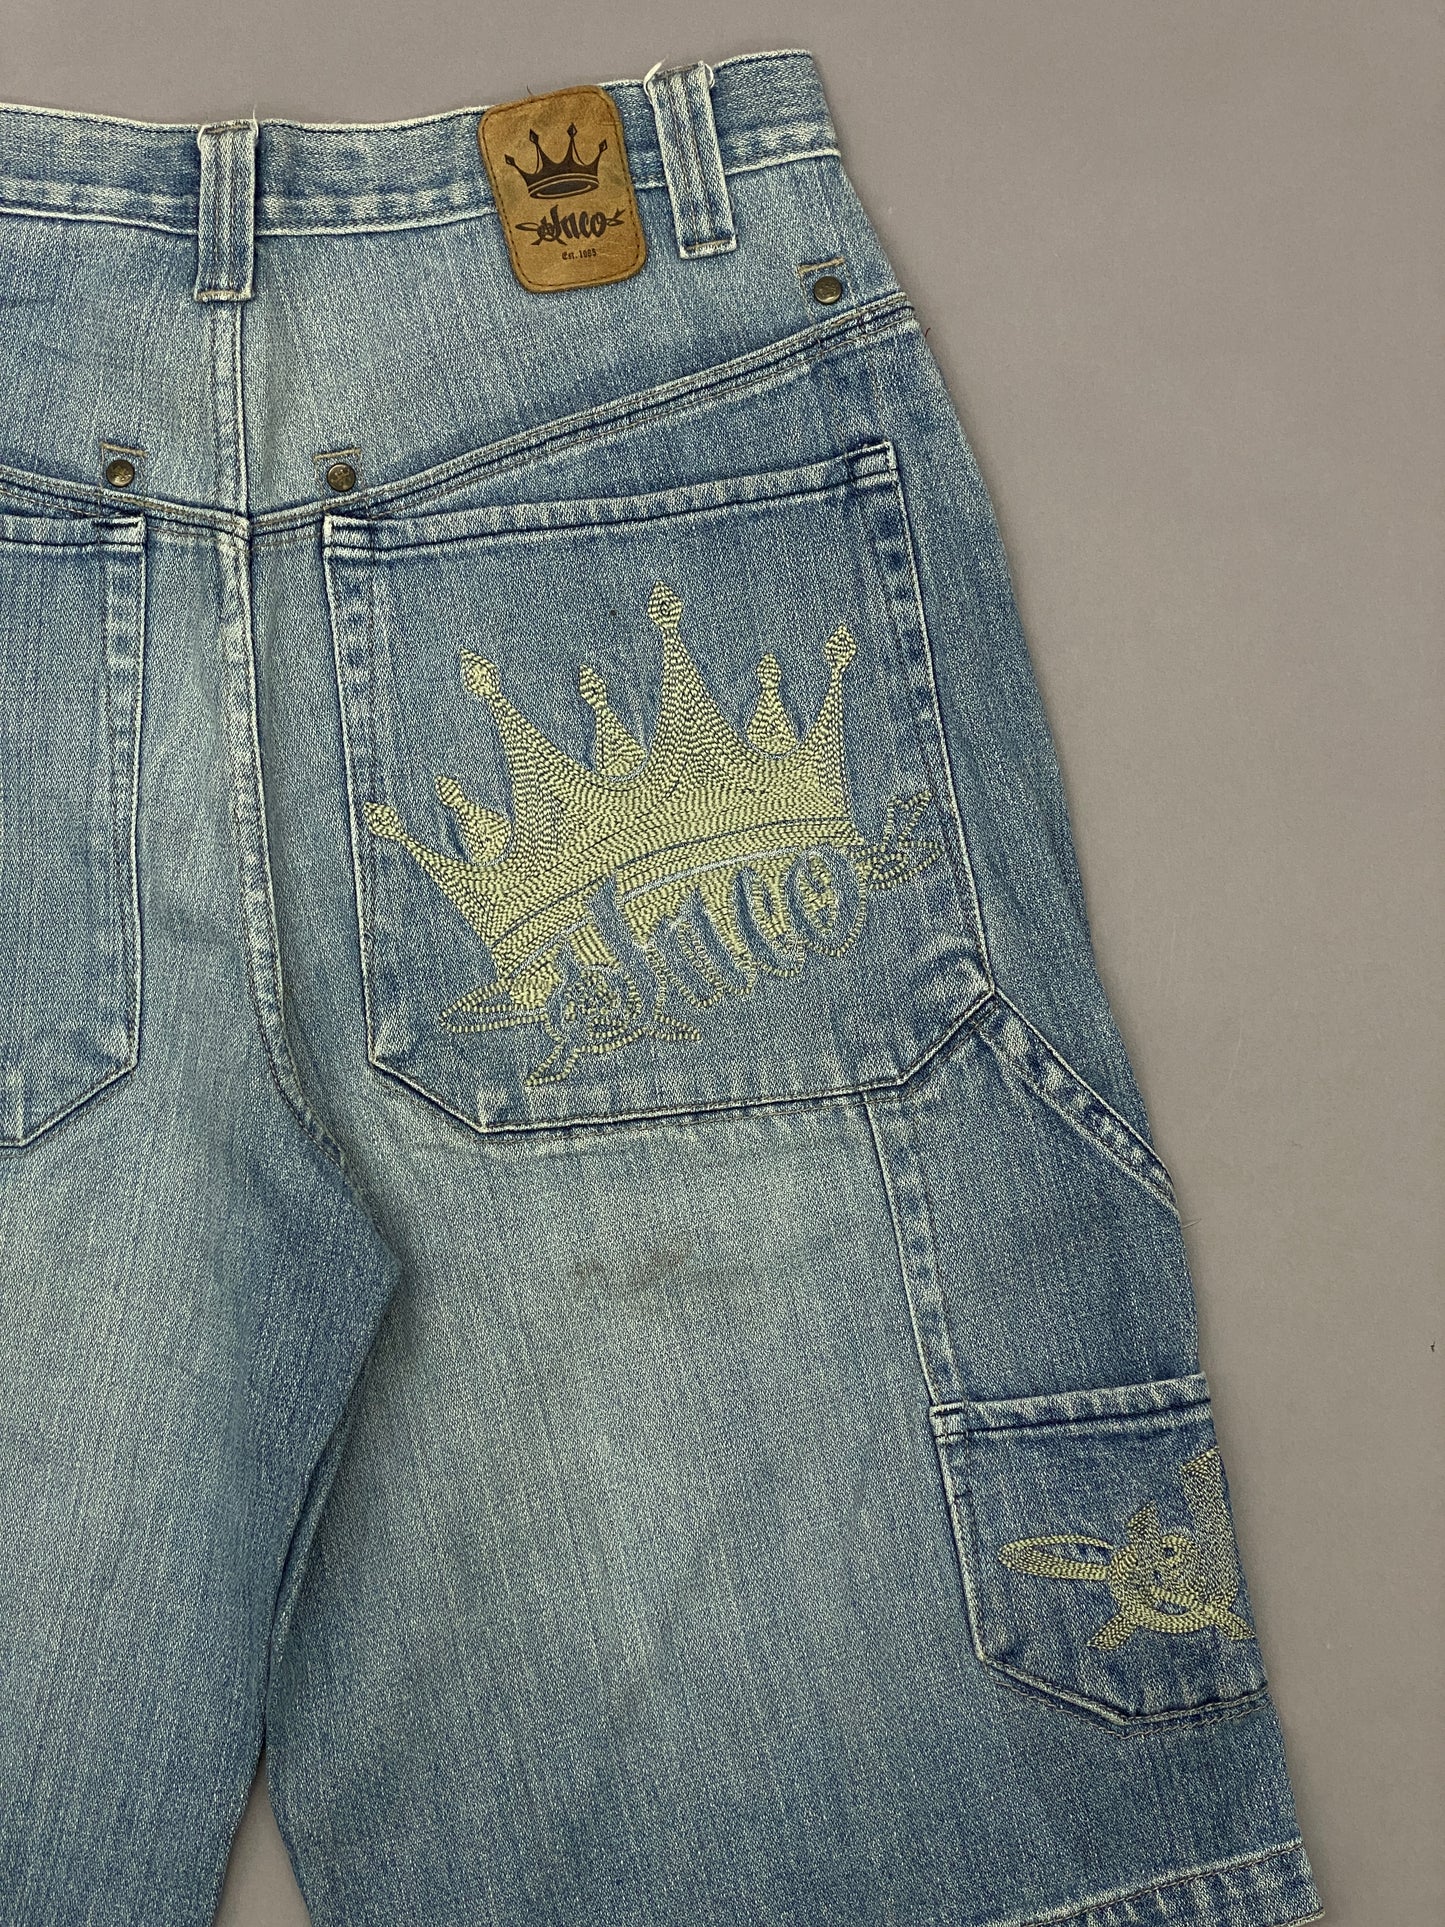 JNCO Crown Vintage Shorts - 32x32